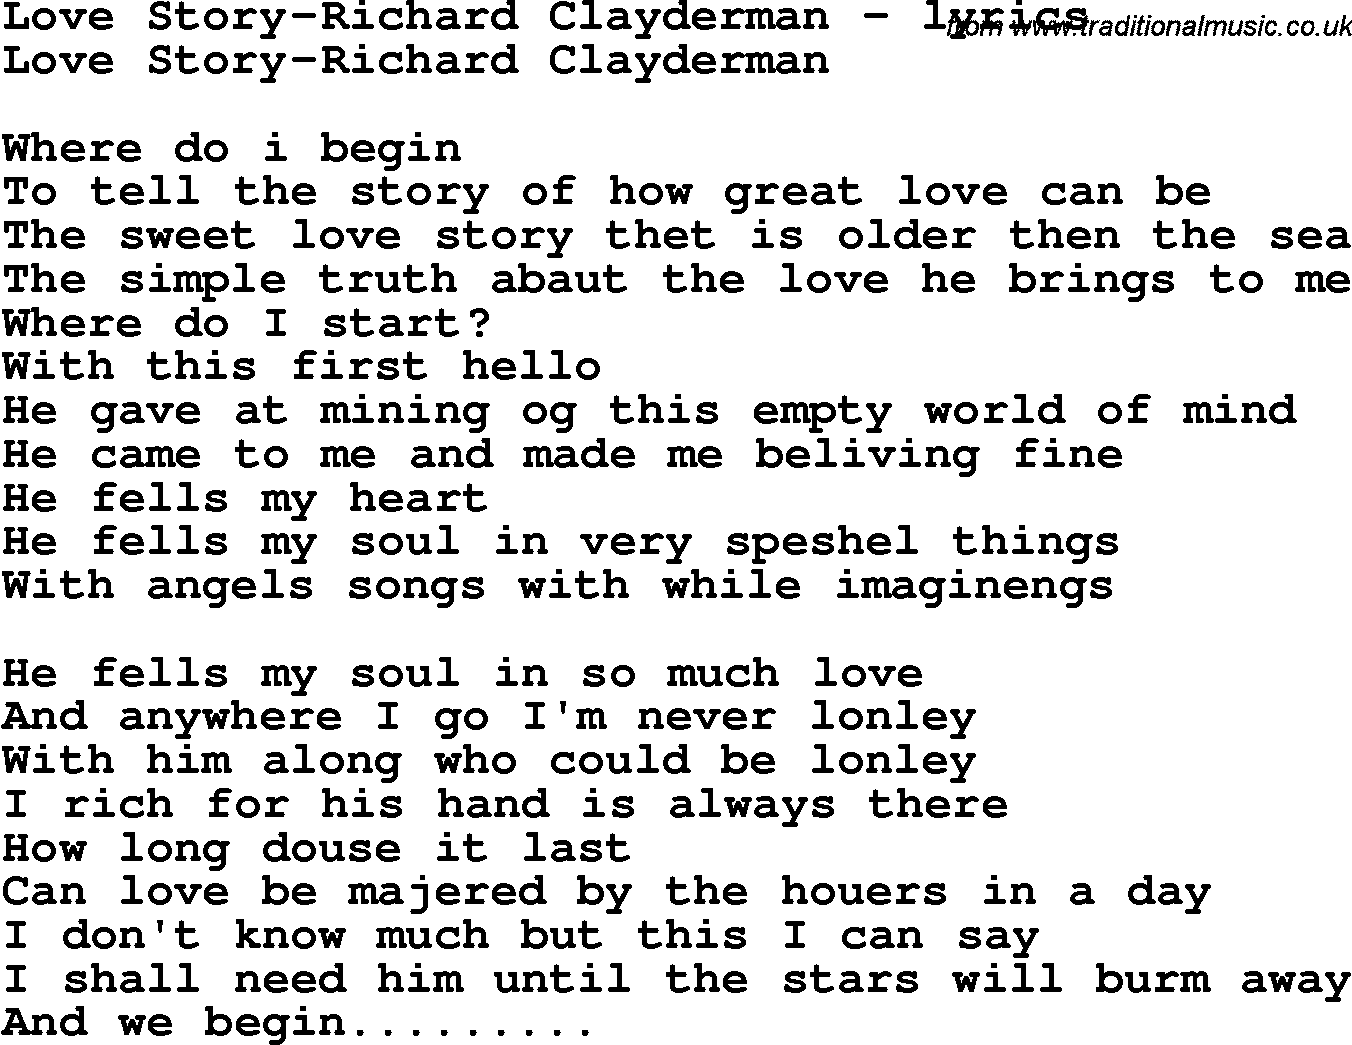 Love Song Lyrics for: Love Story-Richard Clayderman